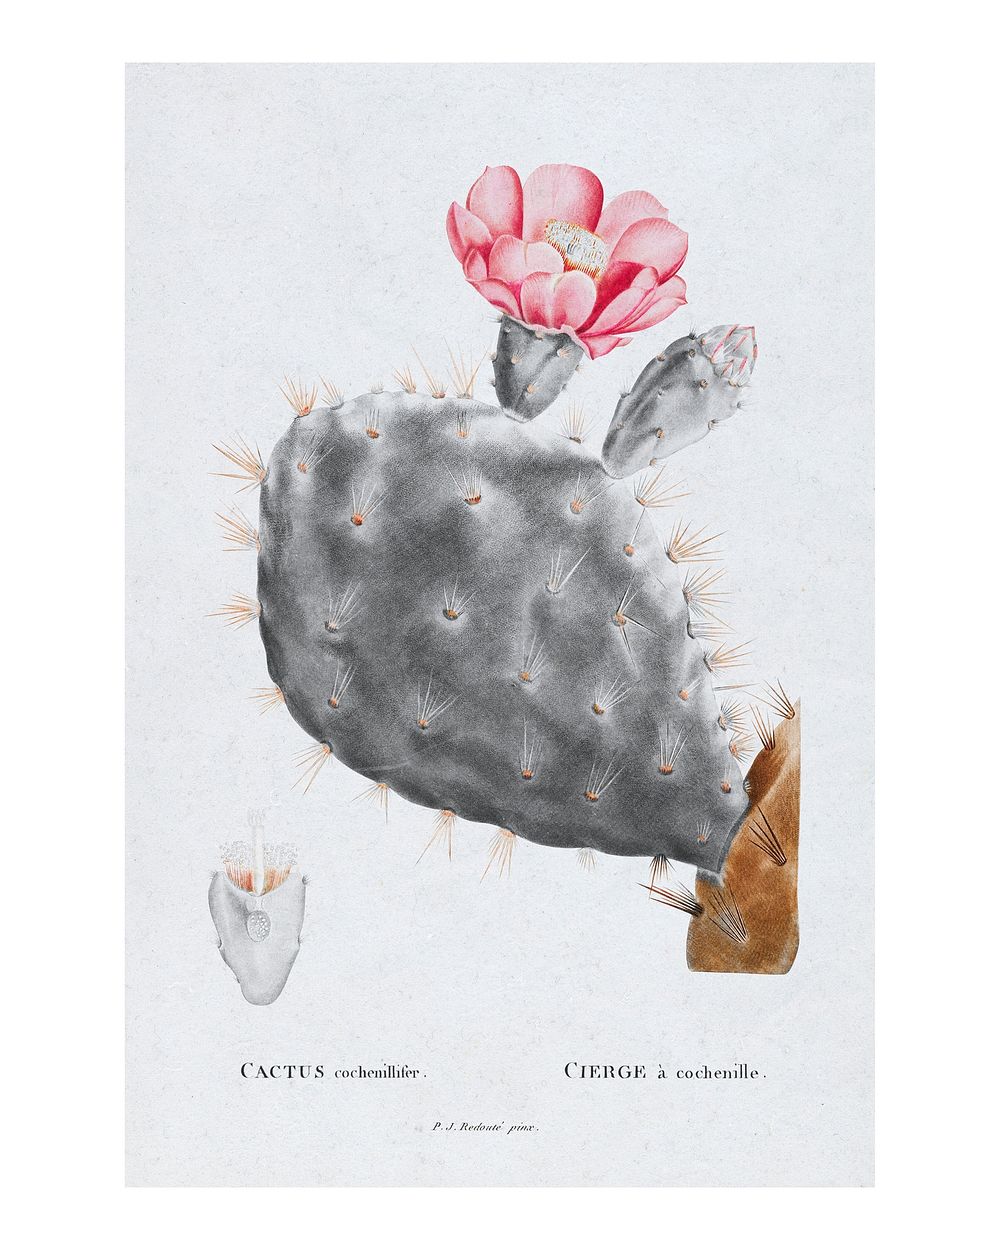 Gray prickly pear cactus vintage illustration, remix from original artwork.